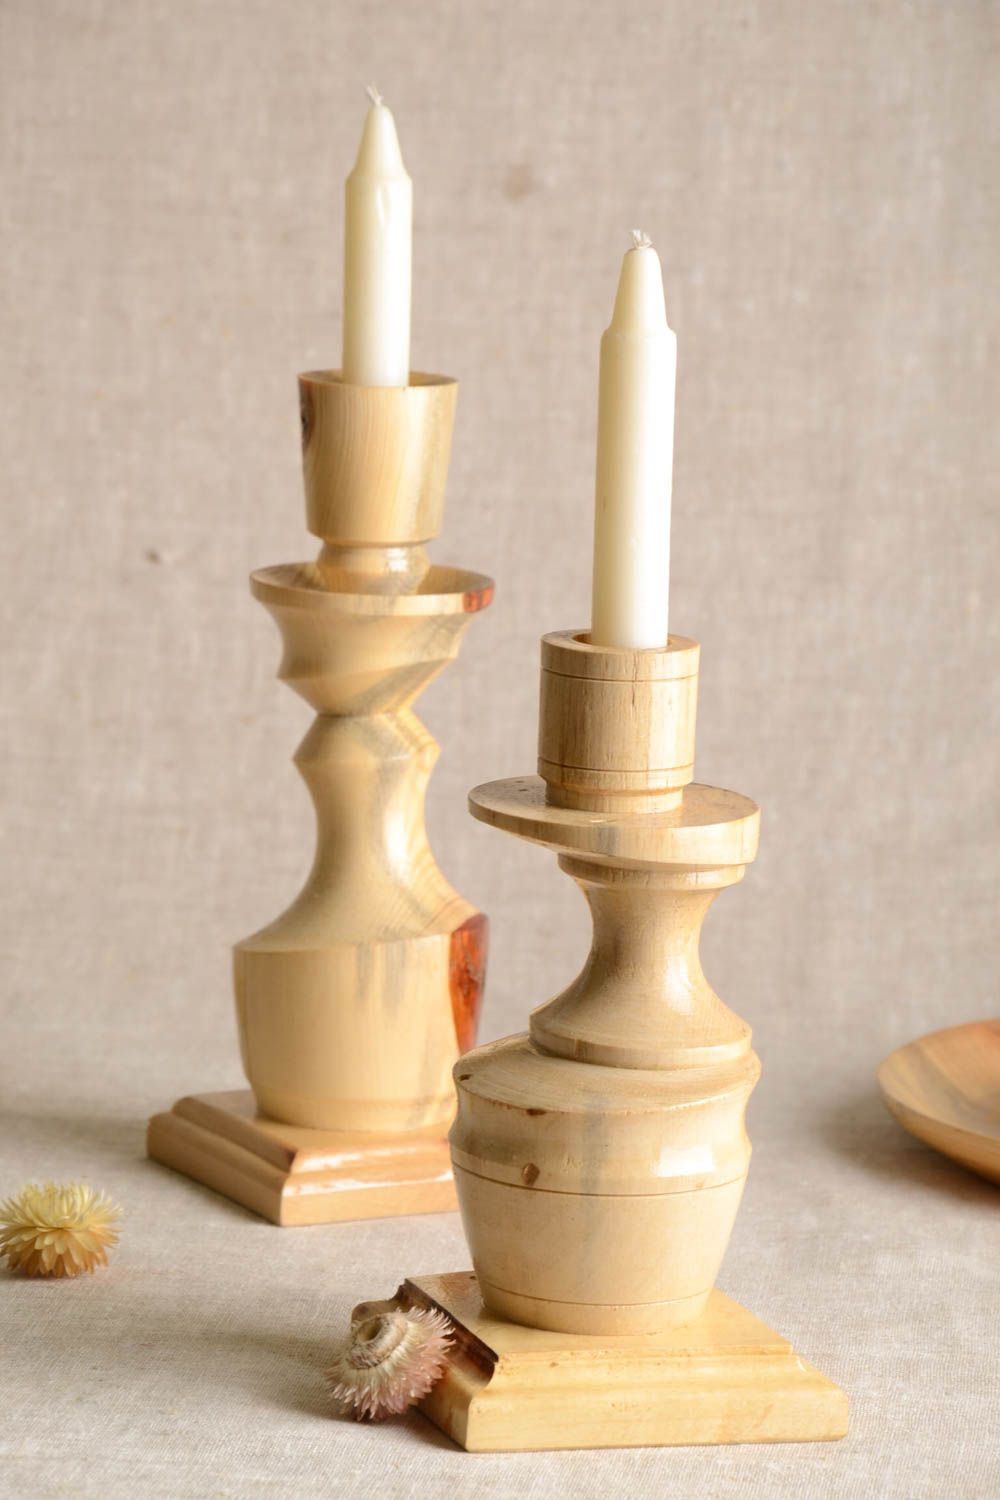 Handmade candlestick designer candle holder decor ideas set of 2 items photo 1